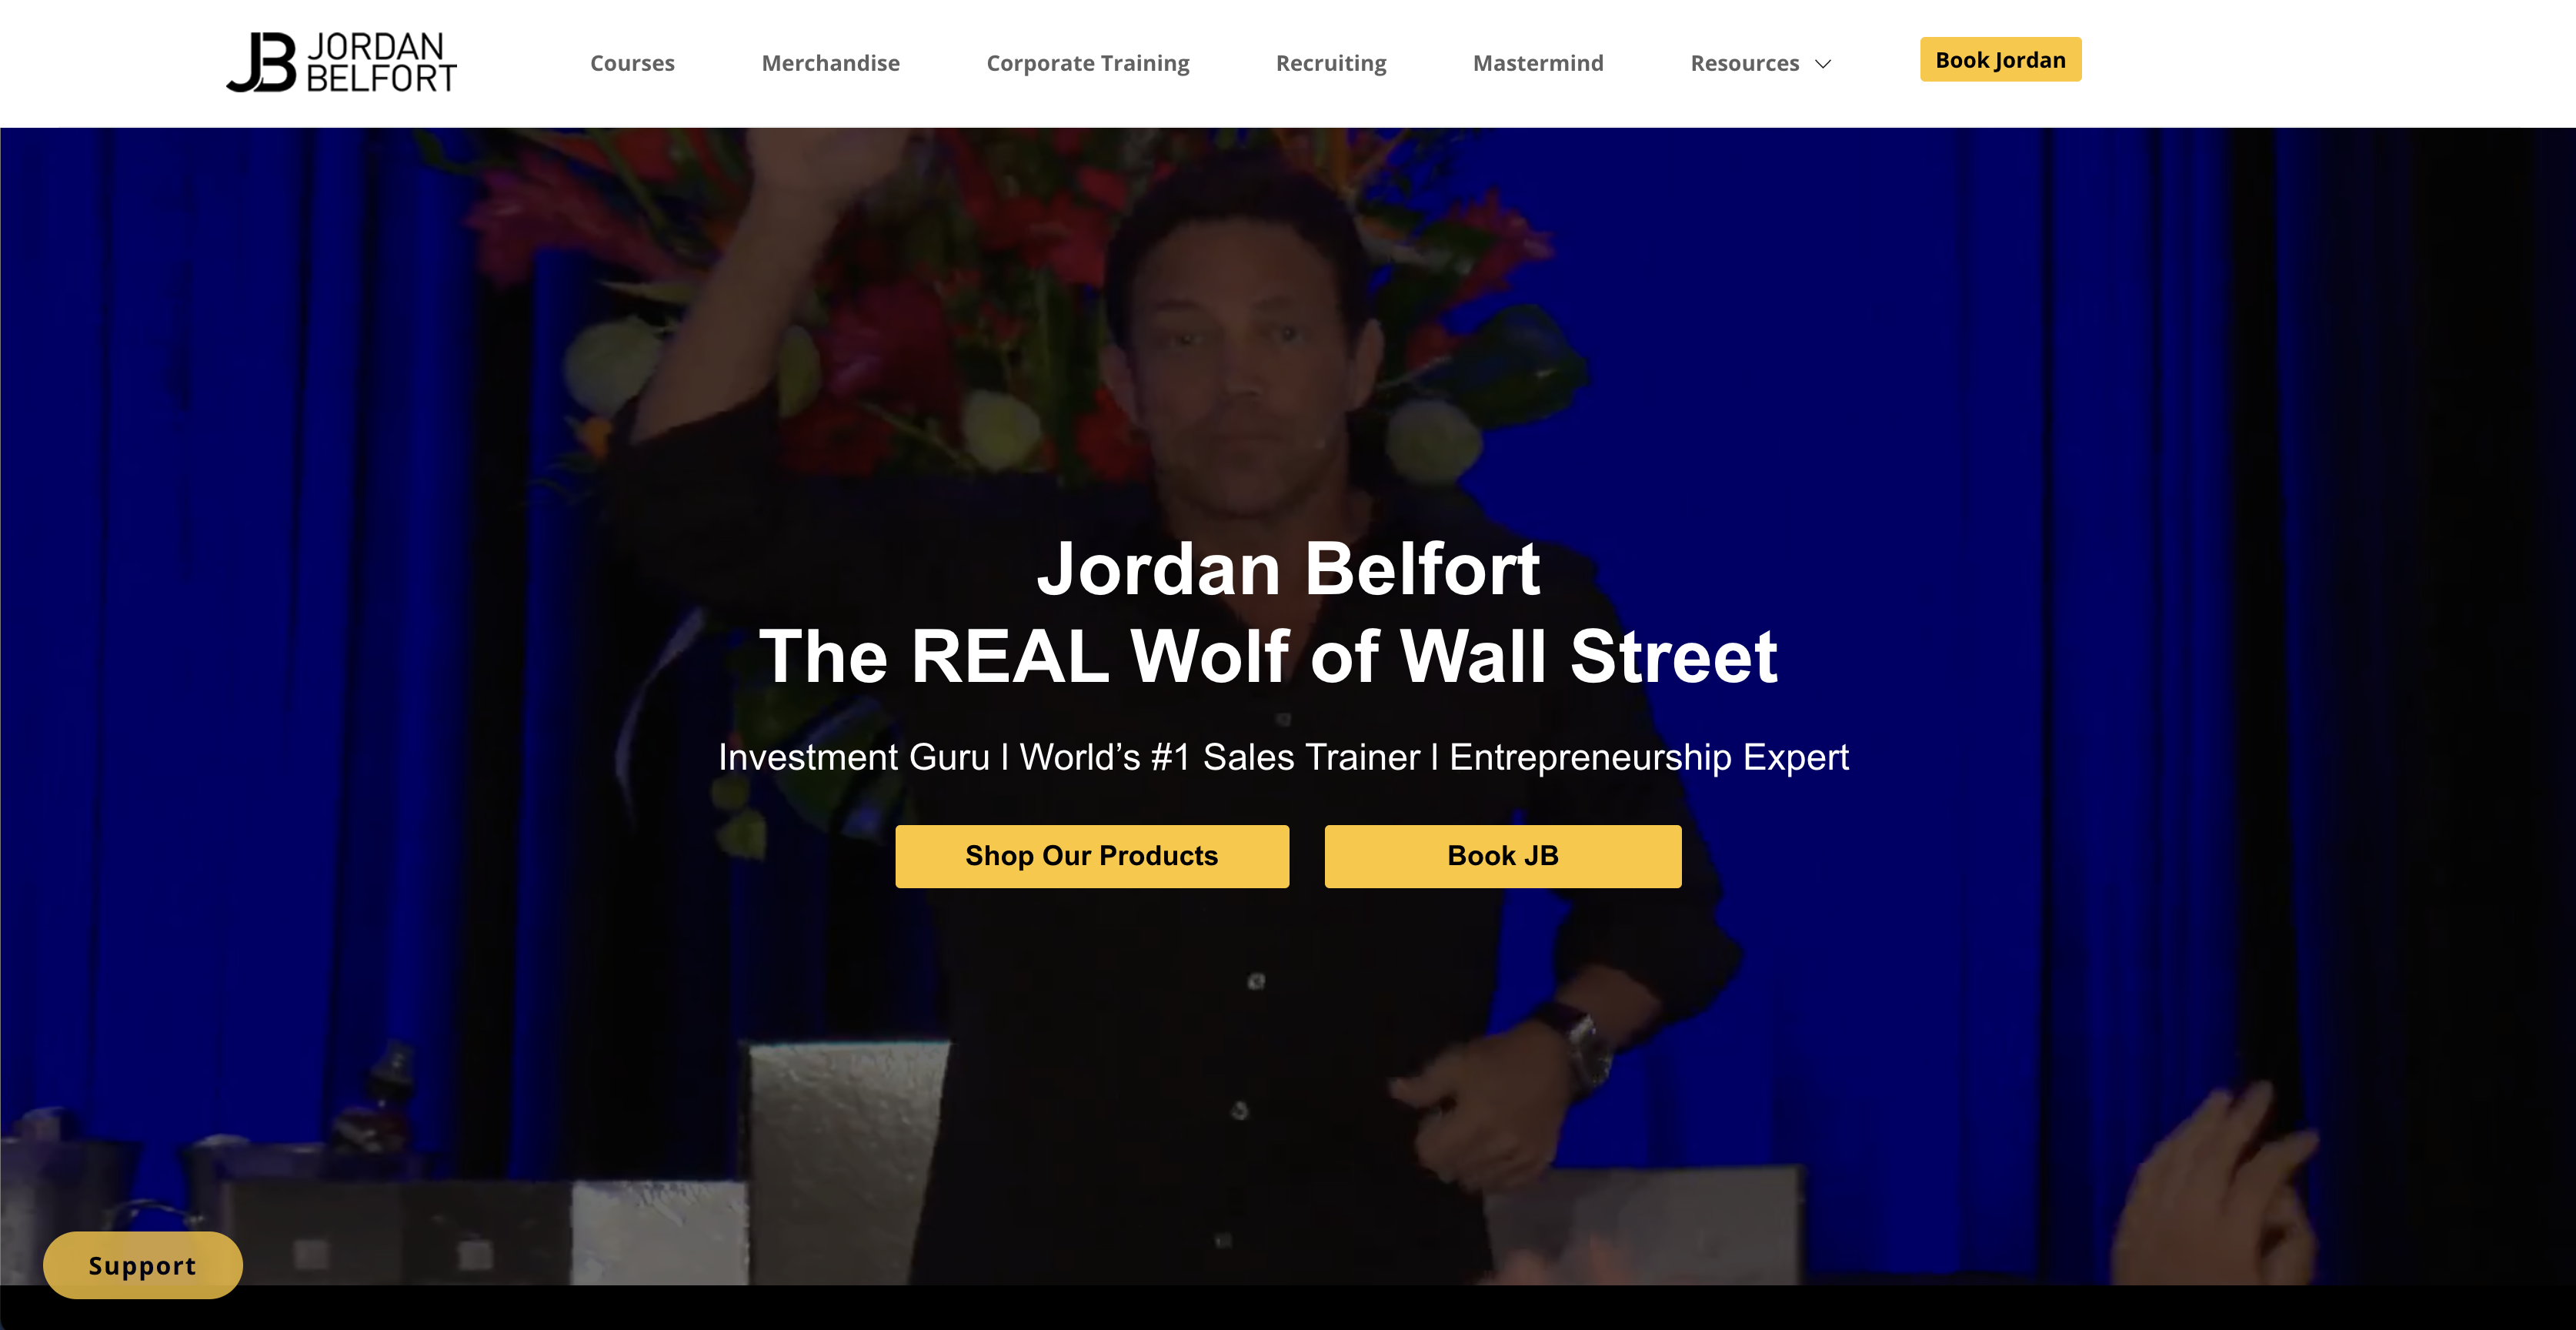 Jordan Belfort's Homepage Hero section